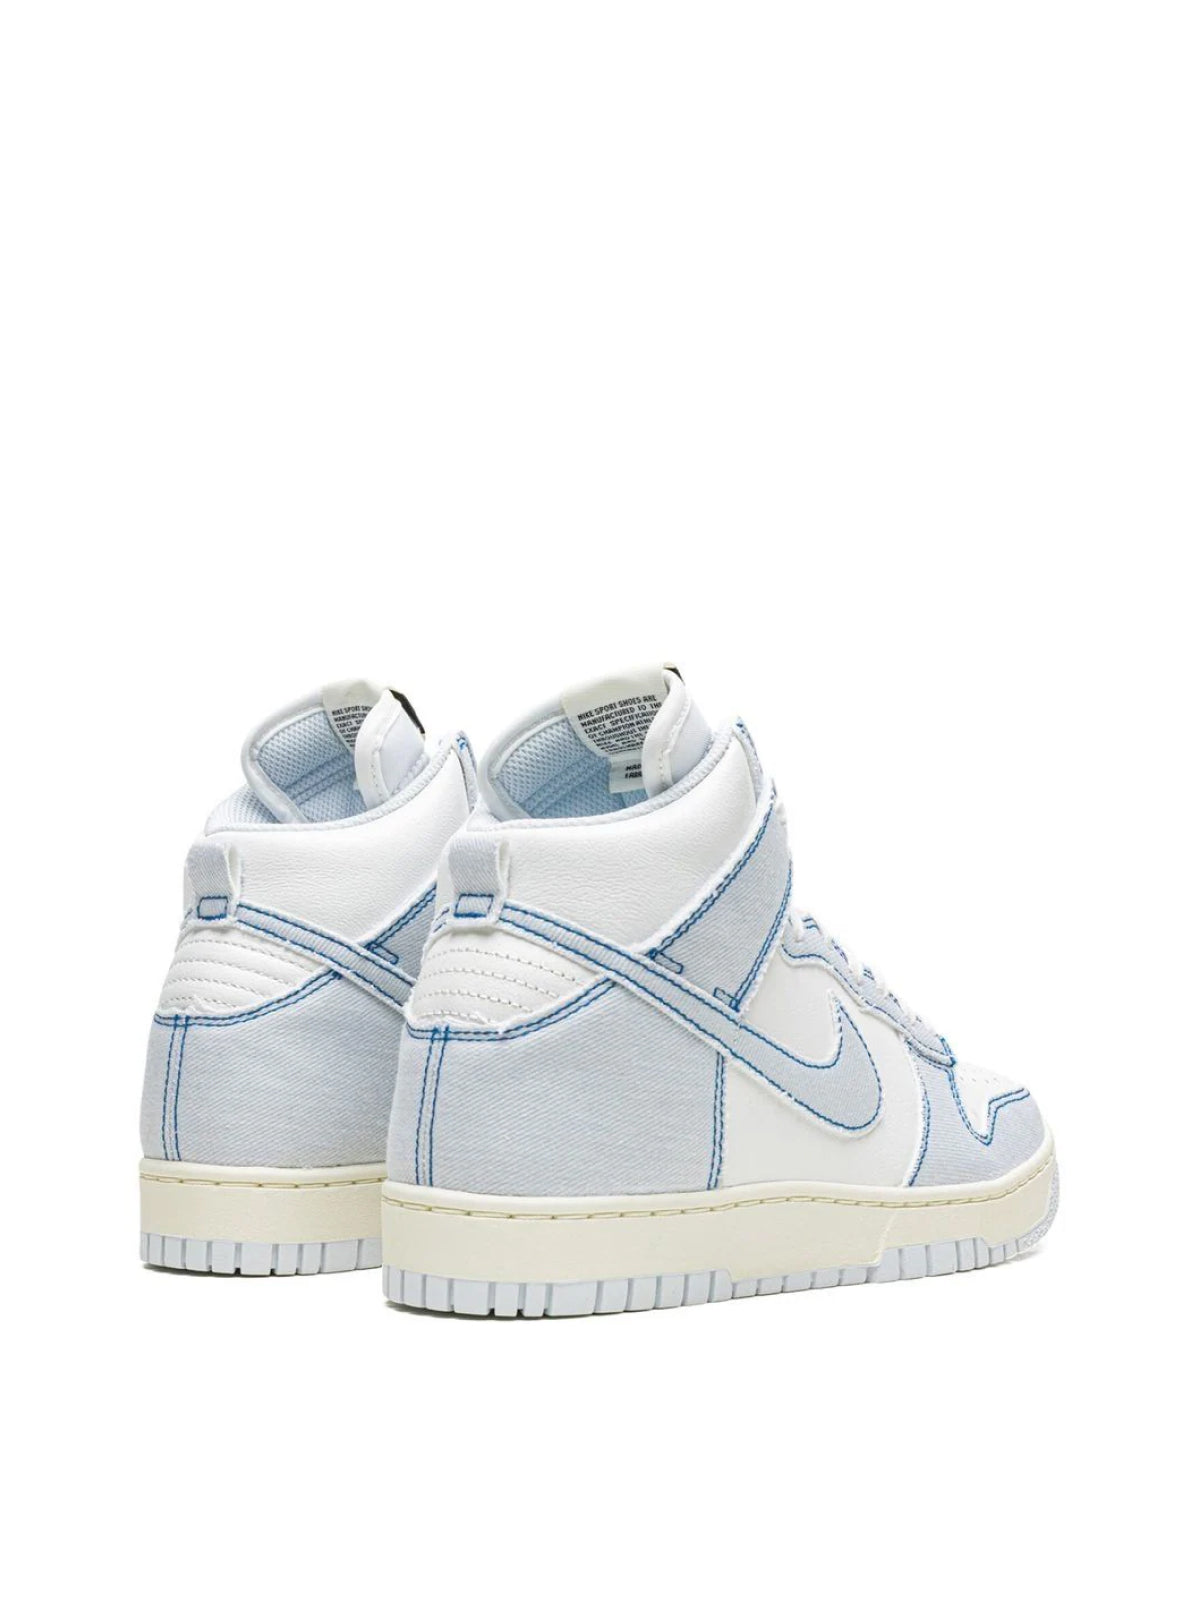 Nike-OUTLET-SALE-Dunk High 1985 'Blue Denim' Sneakers-ARCHIVIST